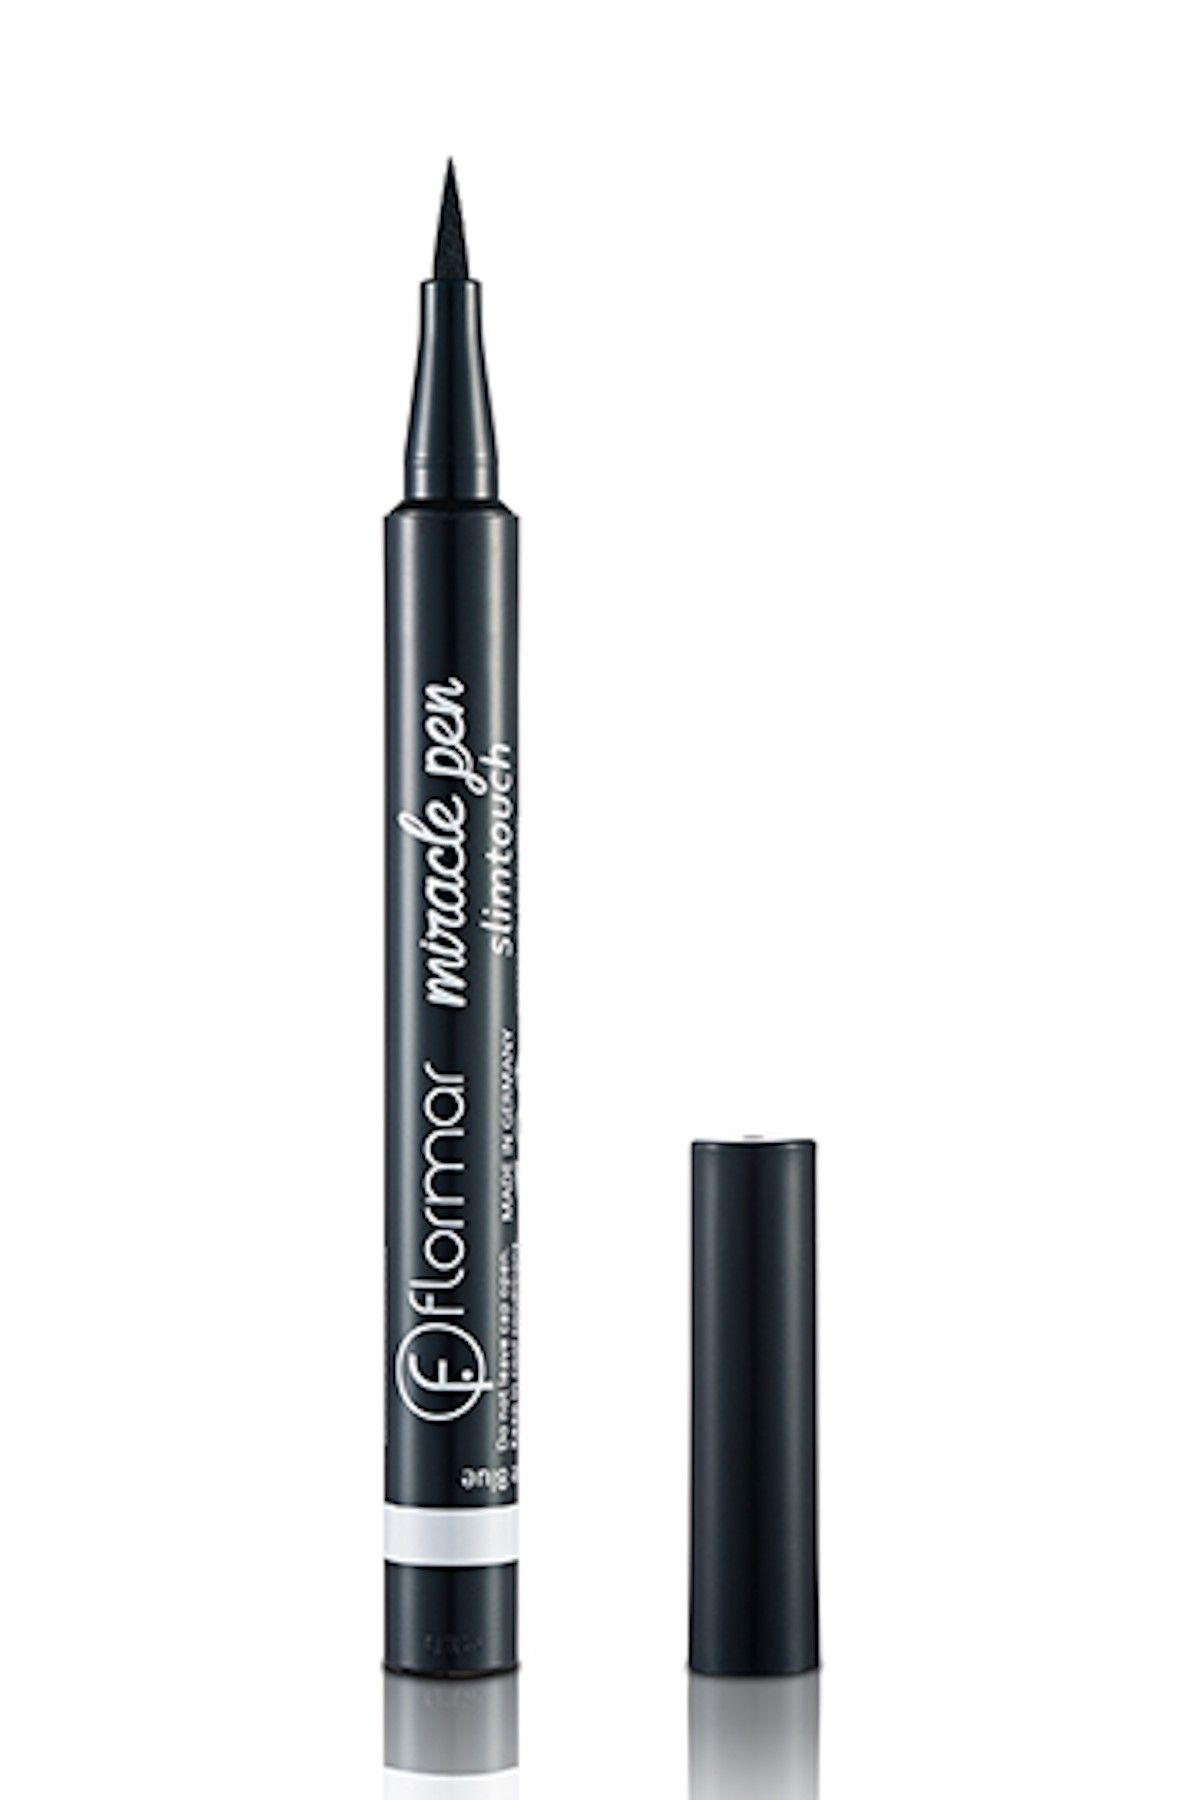 Flormar Lacivert Eyeliner - Miracle Pen Slim Touch Cavansite Blue 8690604259052